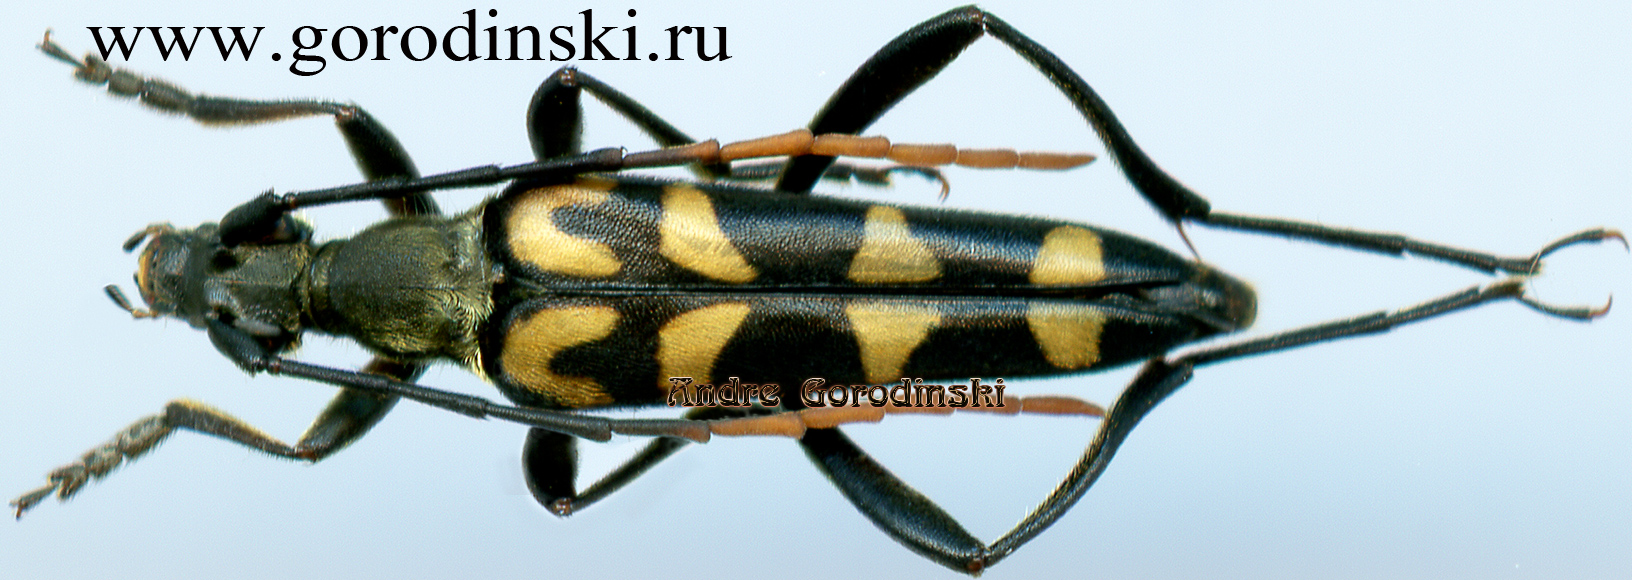 http://www.gorodinski.ru/cerambyx/Leptura annularis.jpg